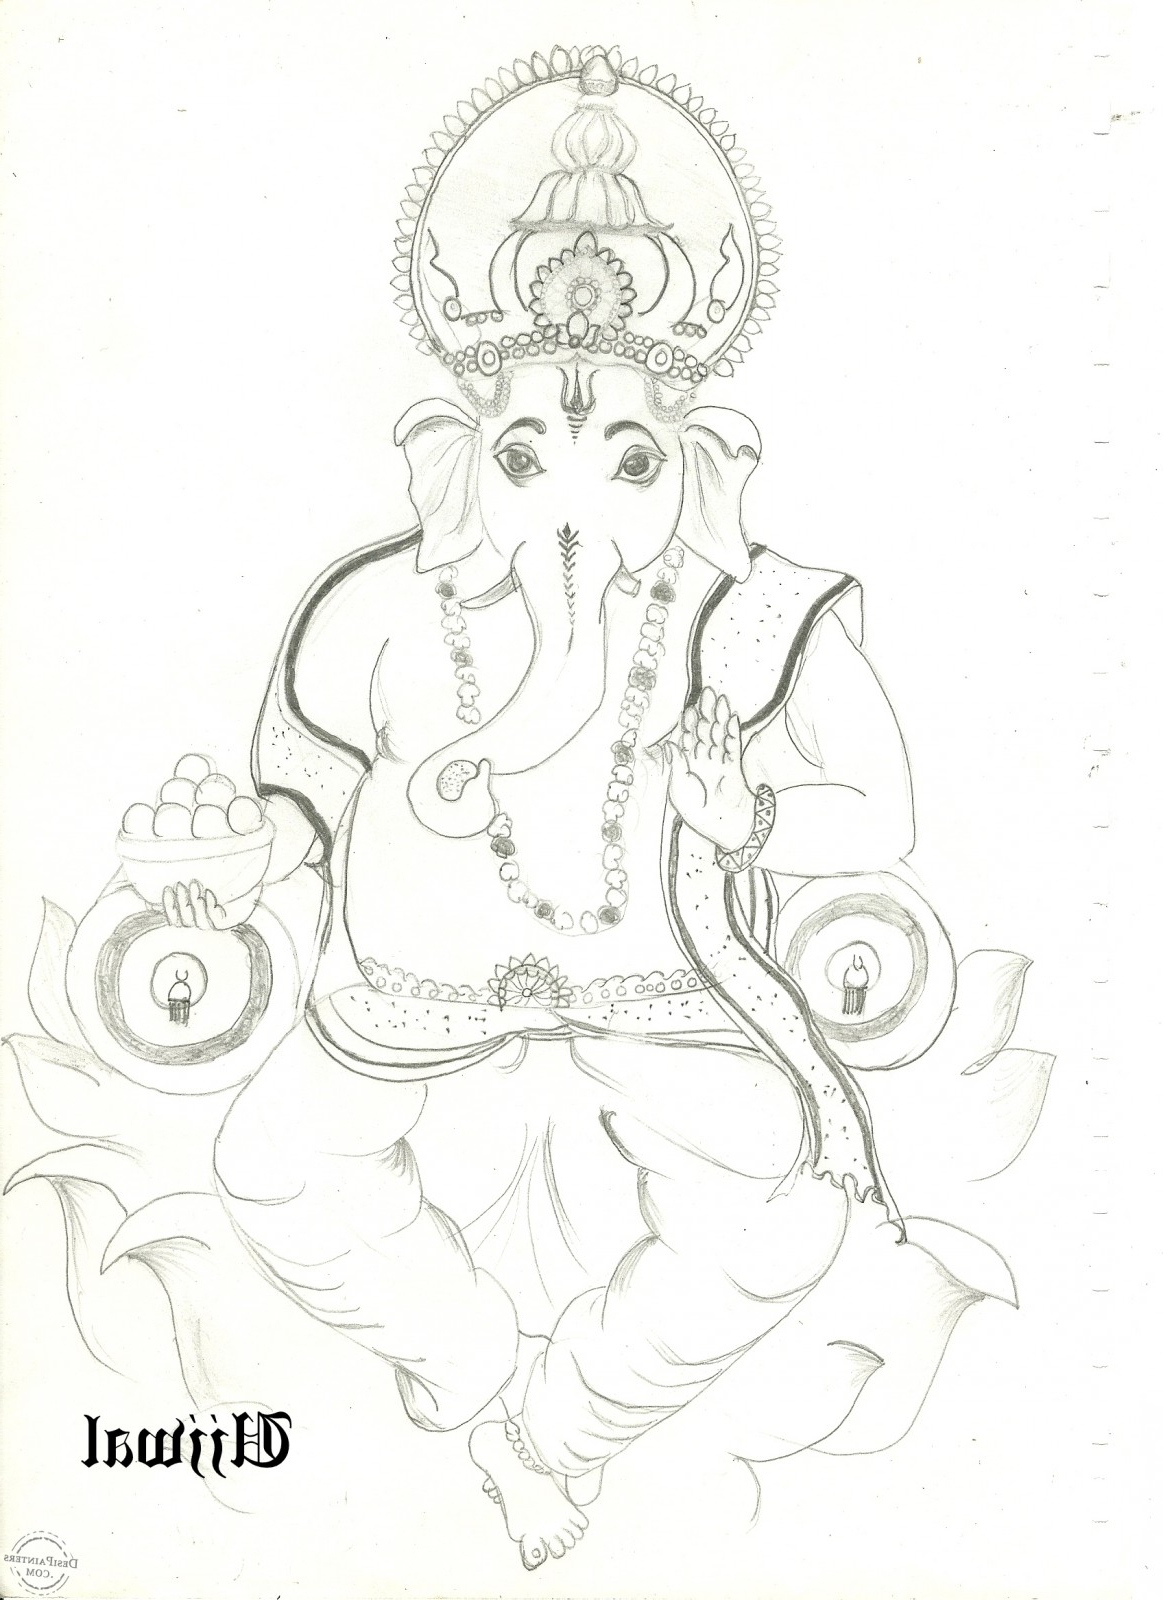 Ganesh Ji Sketch at PaintingValley.com | Explore collection of Ganesh